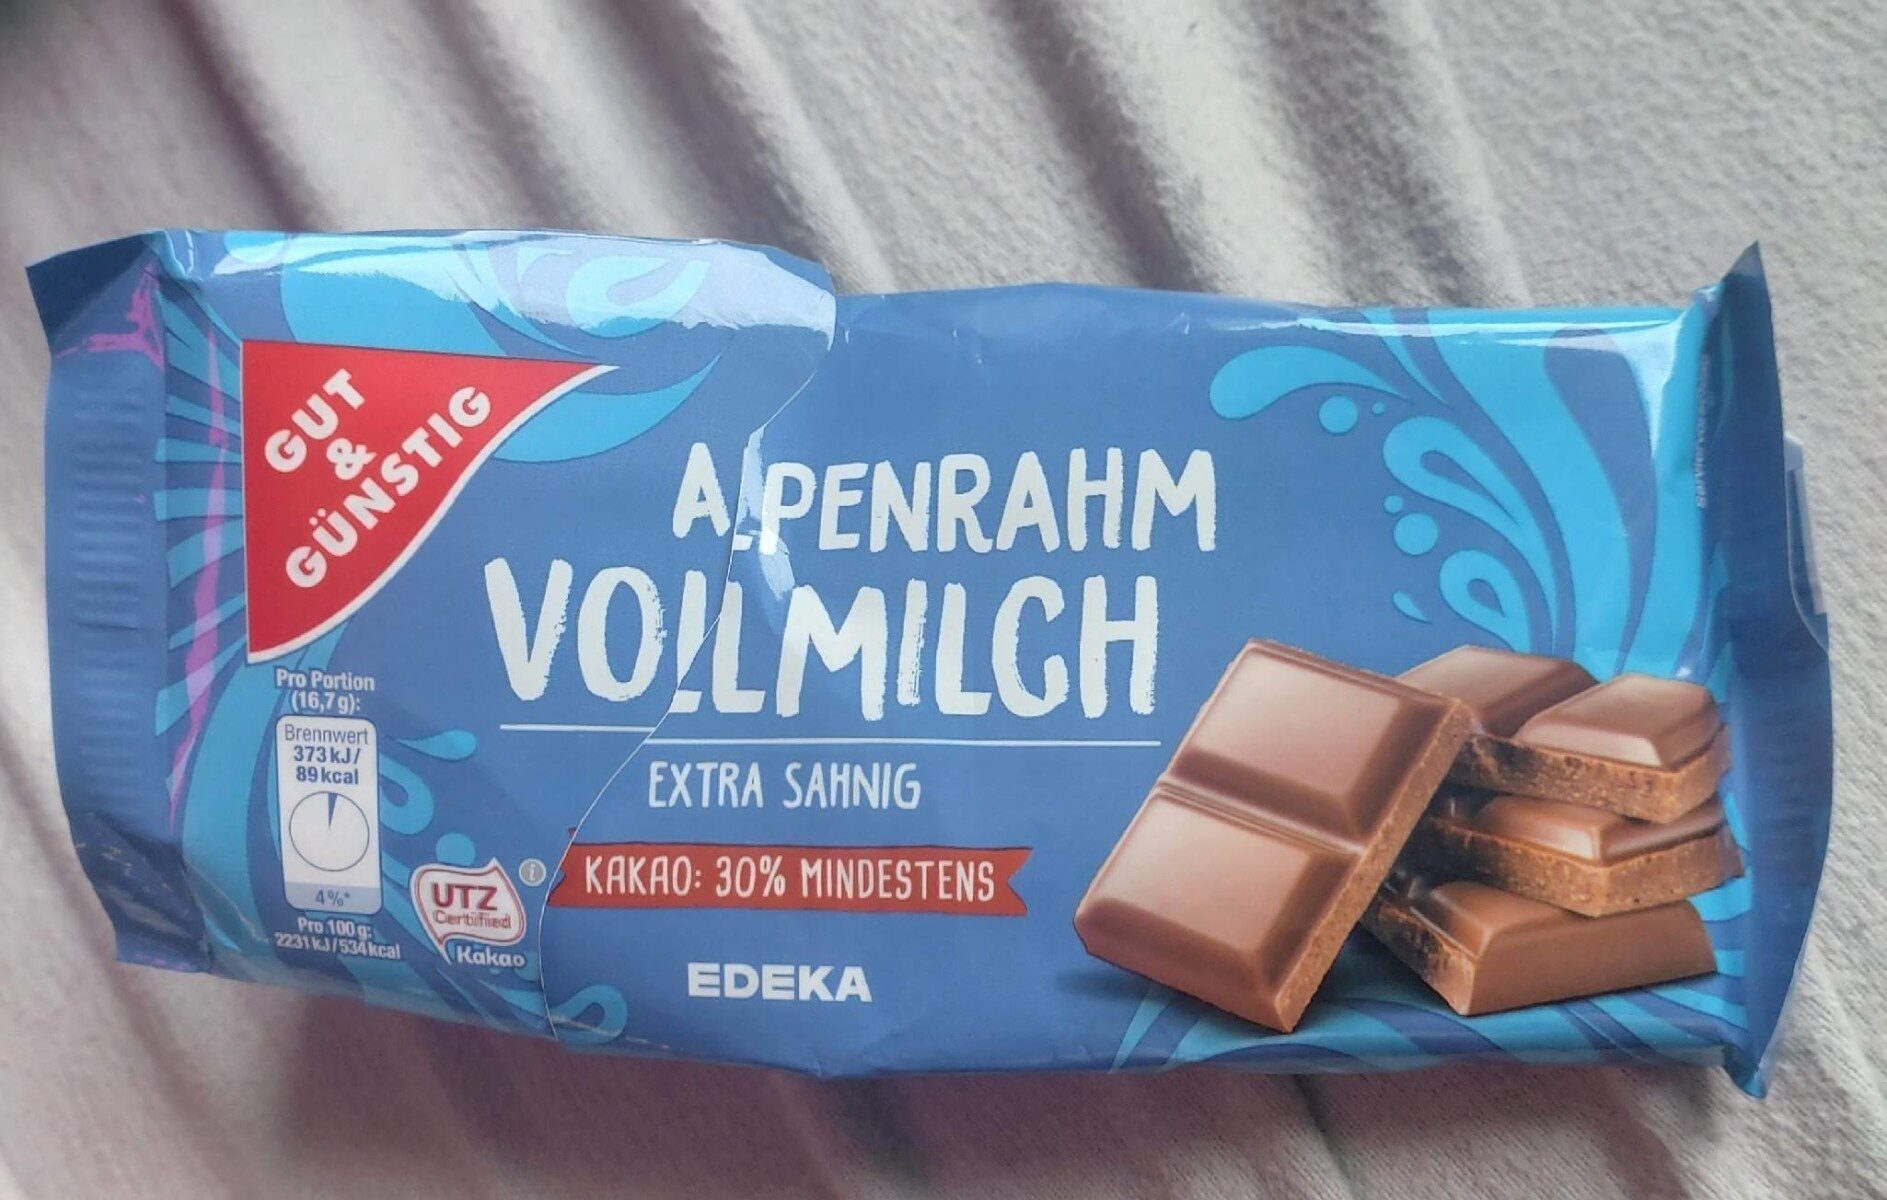 Alpenrahm Vollmilch - extra sahnig - Producto - de